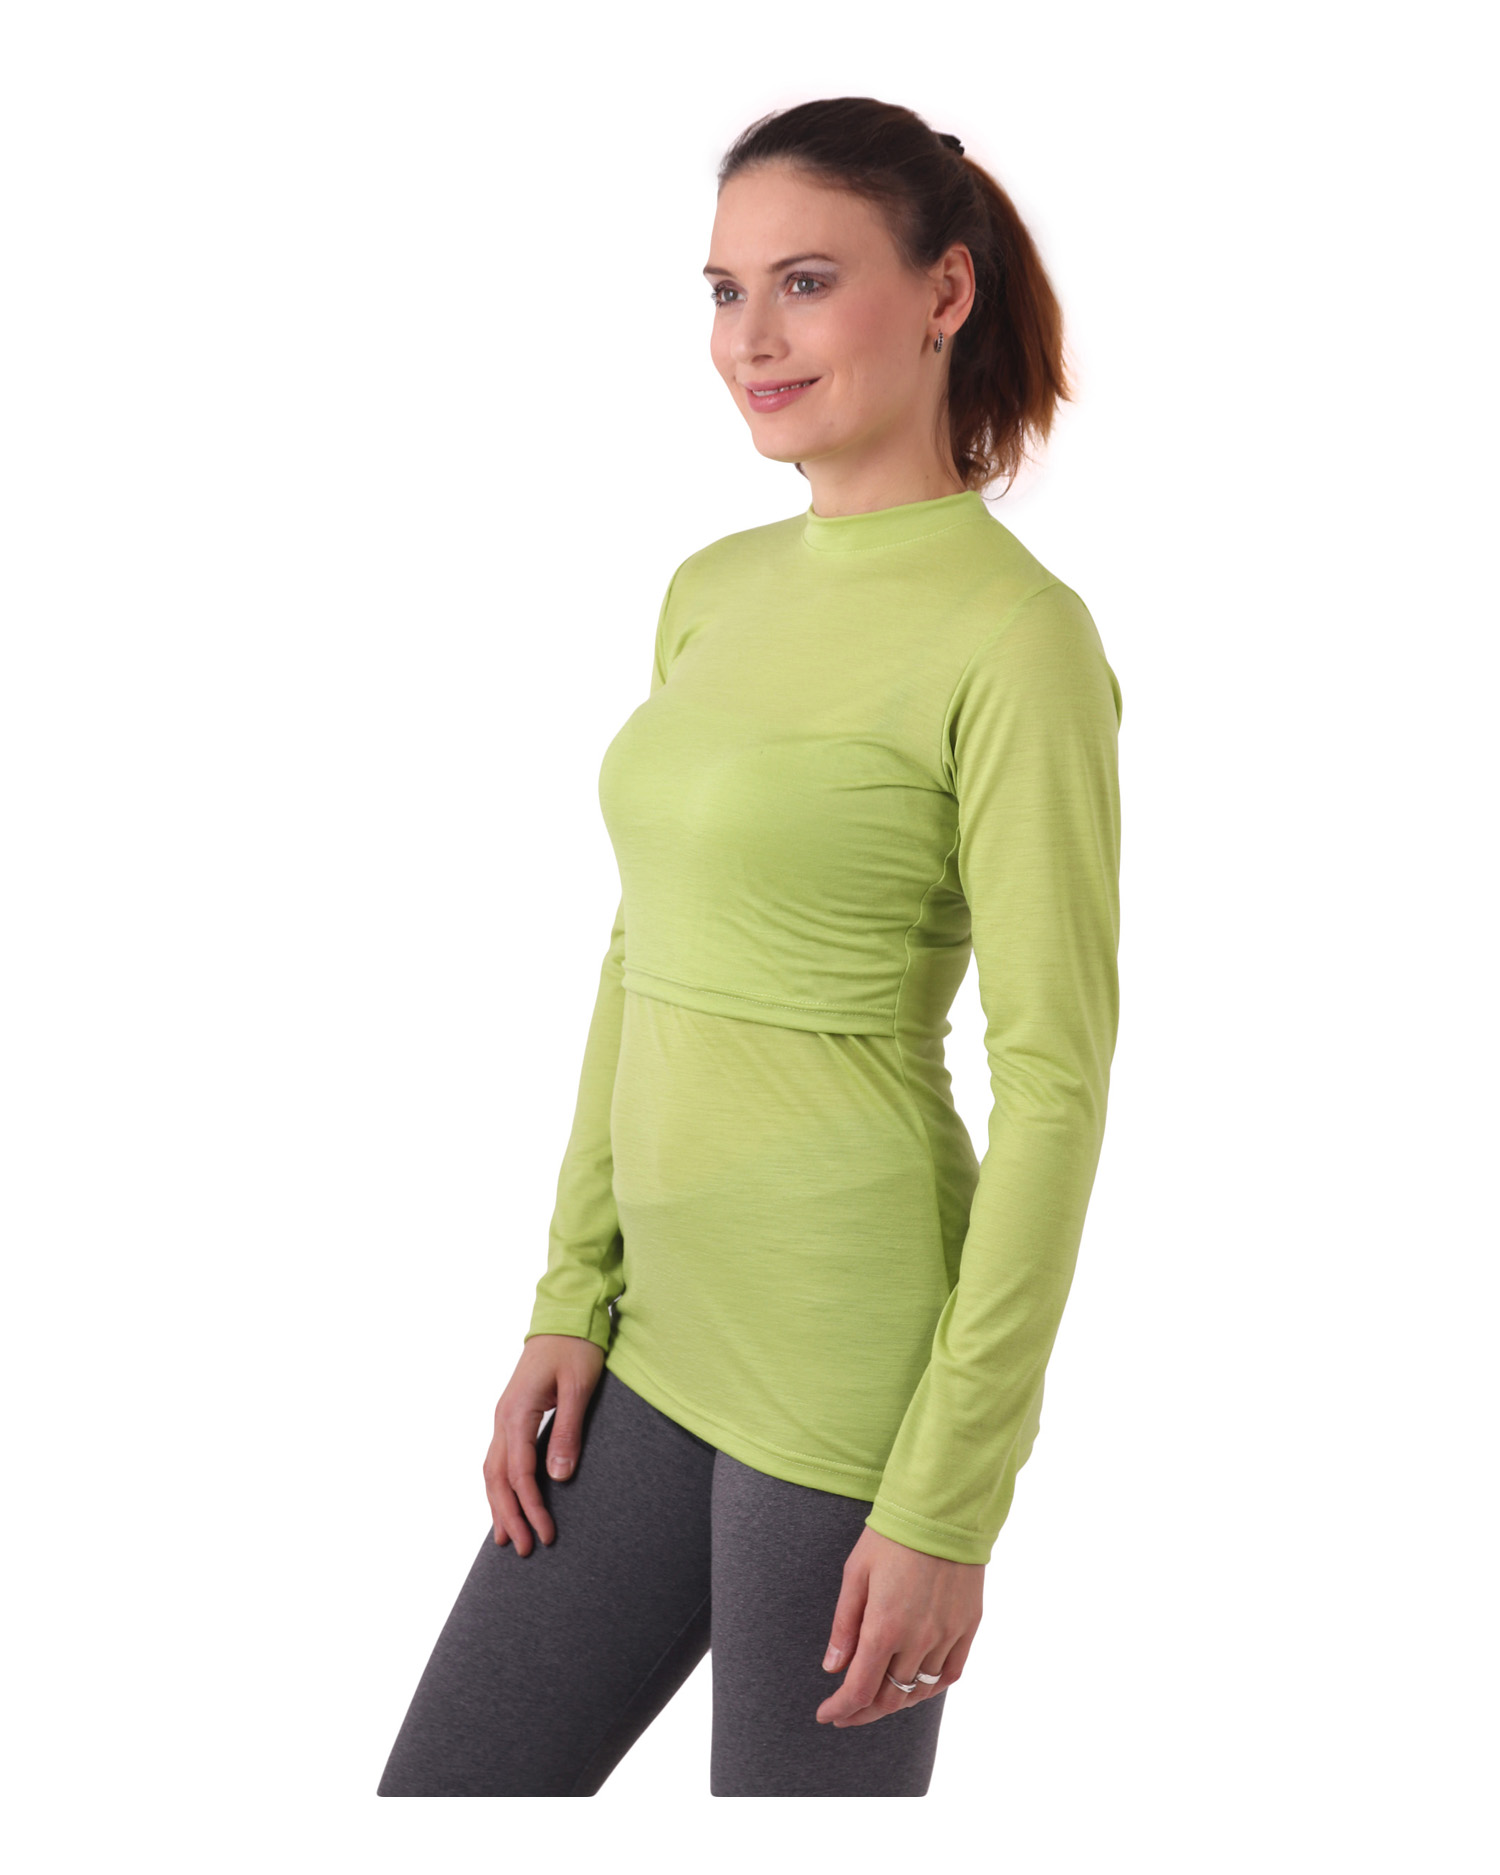 Nursing t-shirt merino wool Meda, long sleeve, green